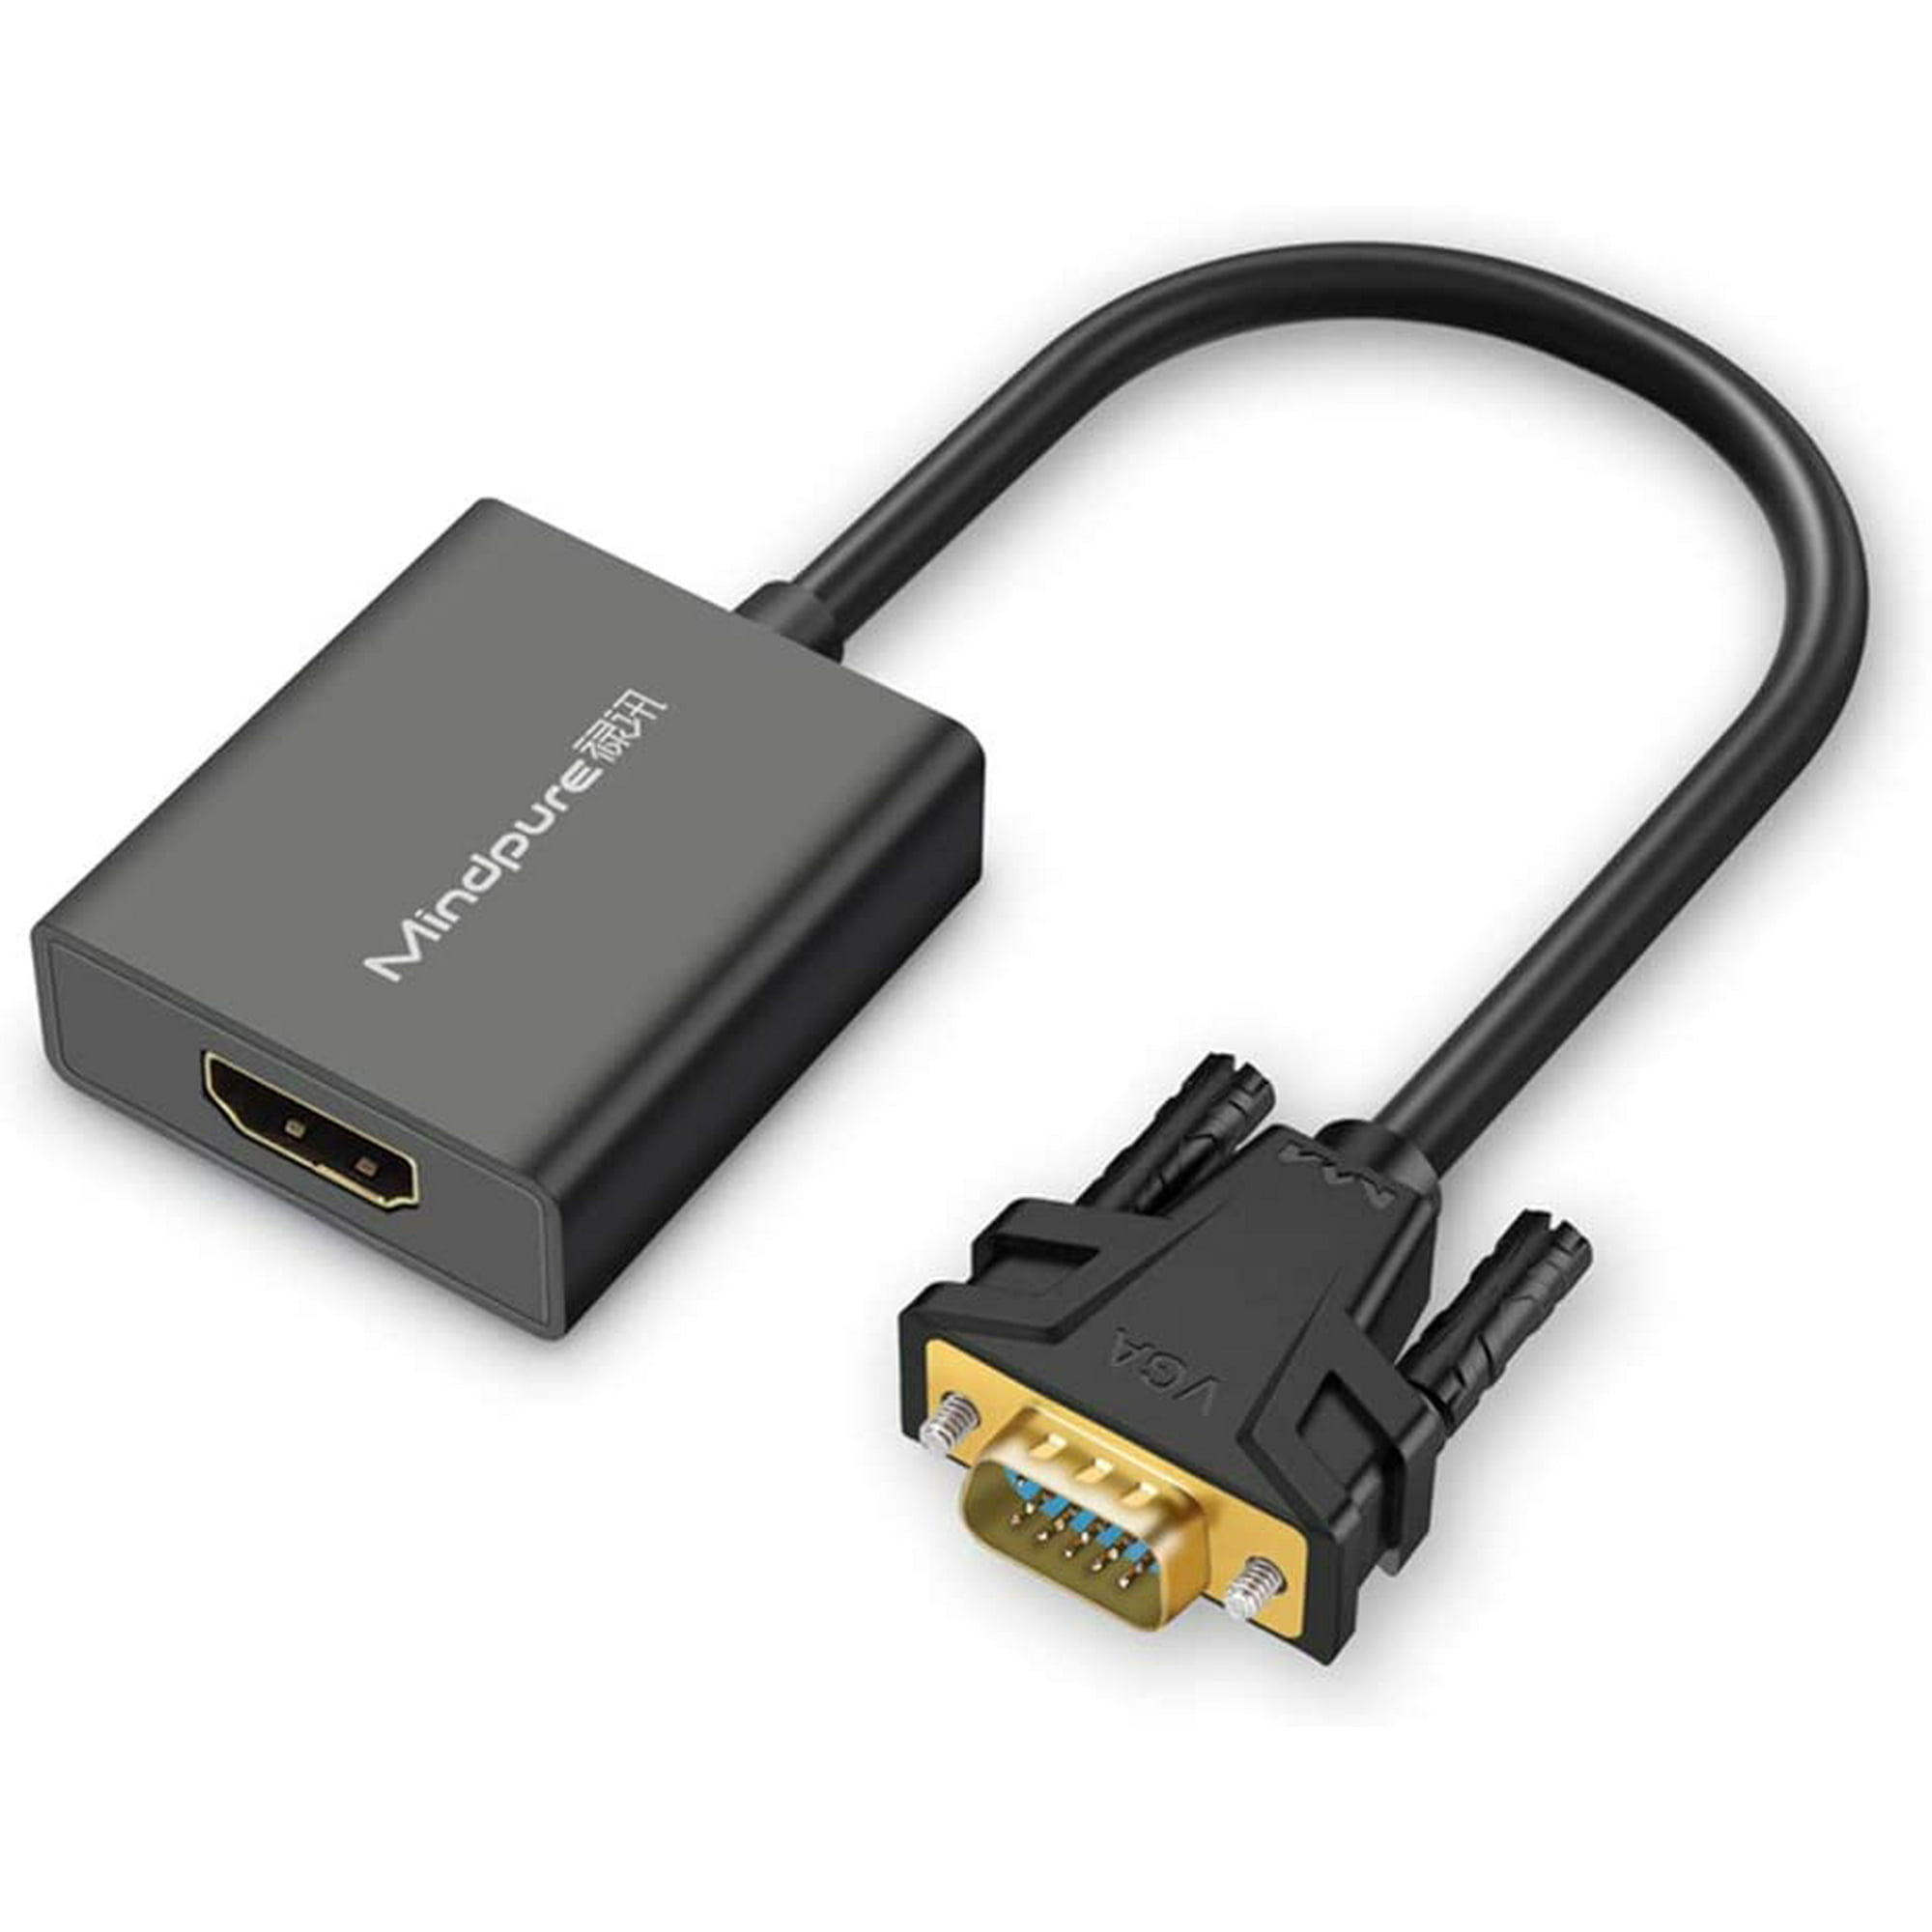 Mindpure VGA to HDMI Adapter, 1080P VGA Male to HDMI Female Converter for TV Stick, Raspberry Laptop, PC, Tablet, Walmart Canada